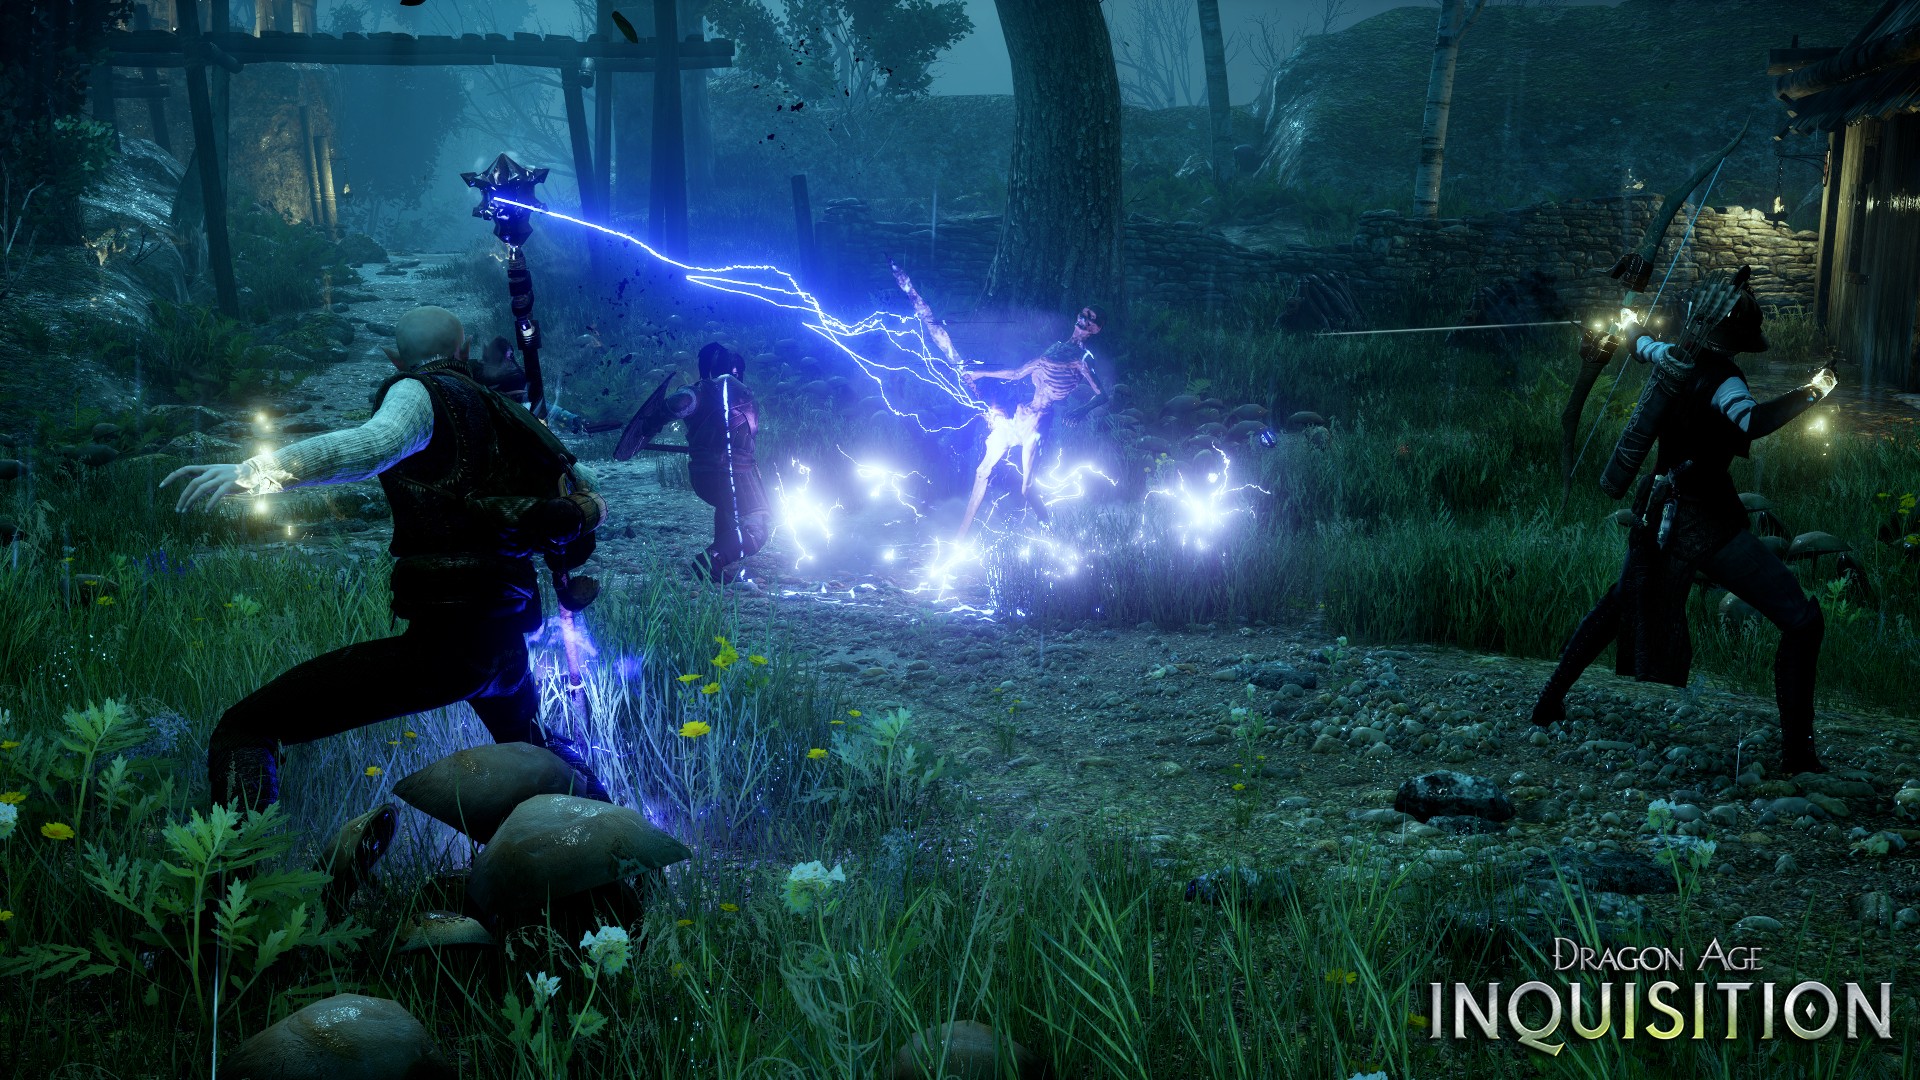 Dragon Age Inquisition Video Reveals Elder One Antagonist, New Enemy Types